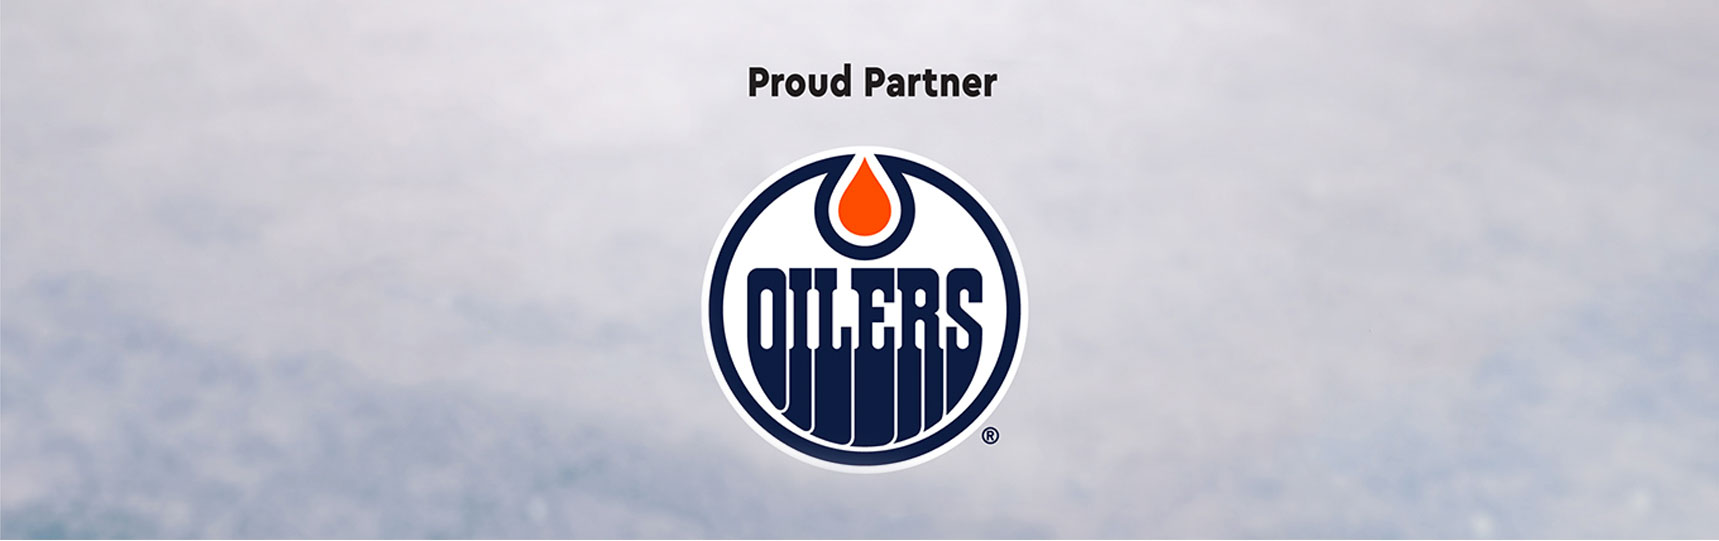 NHL Oilers Partner